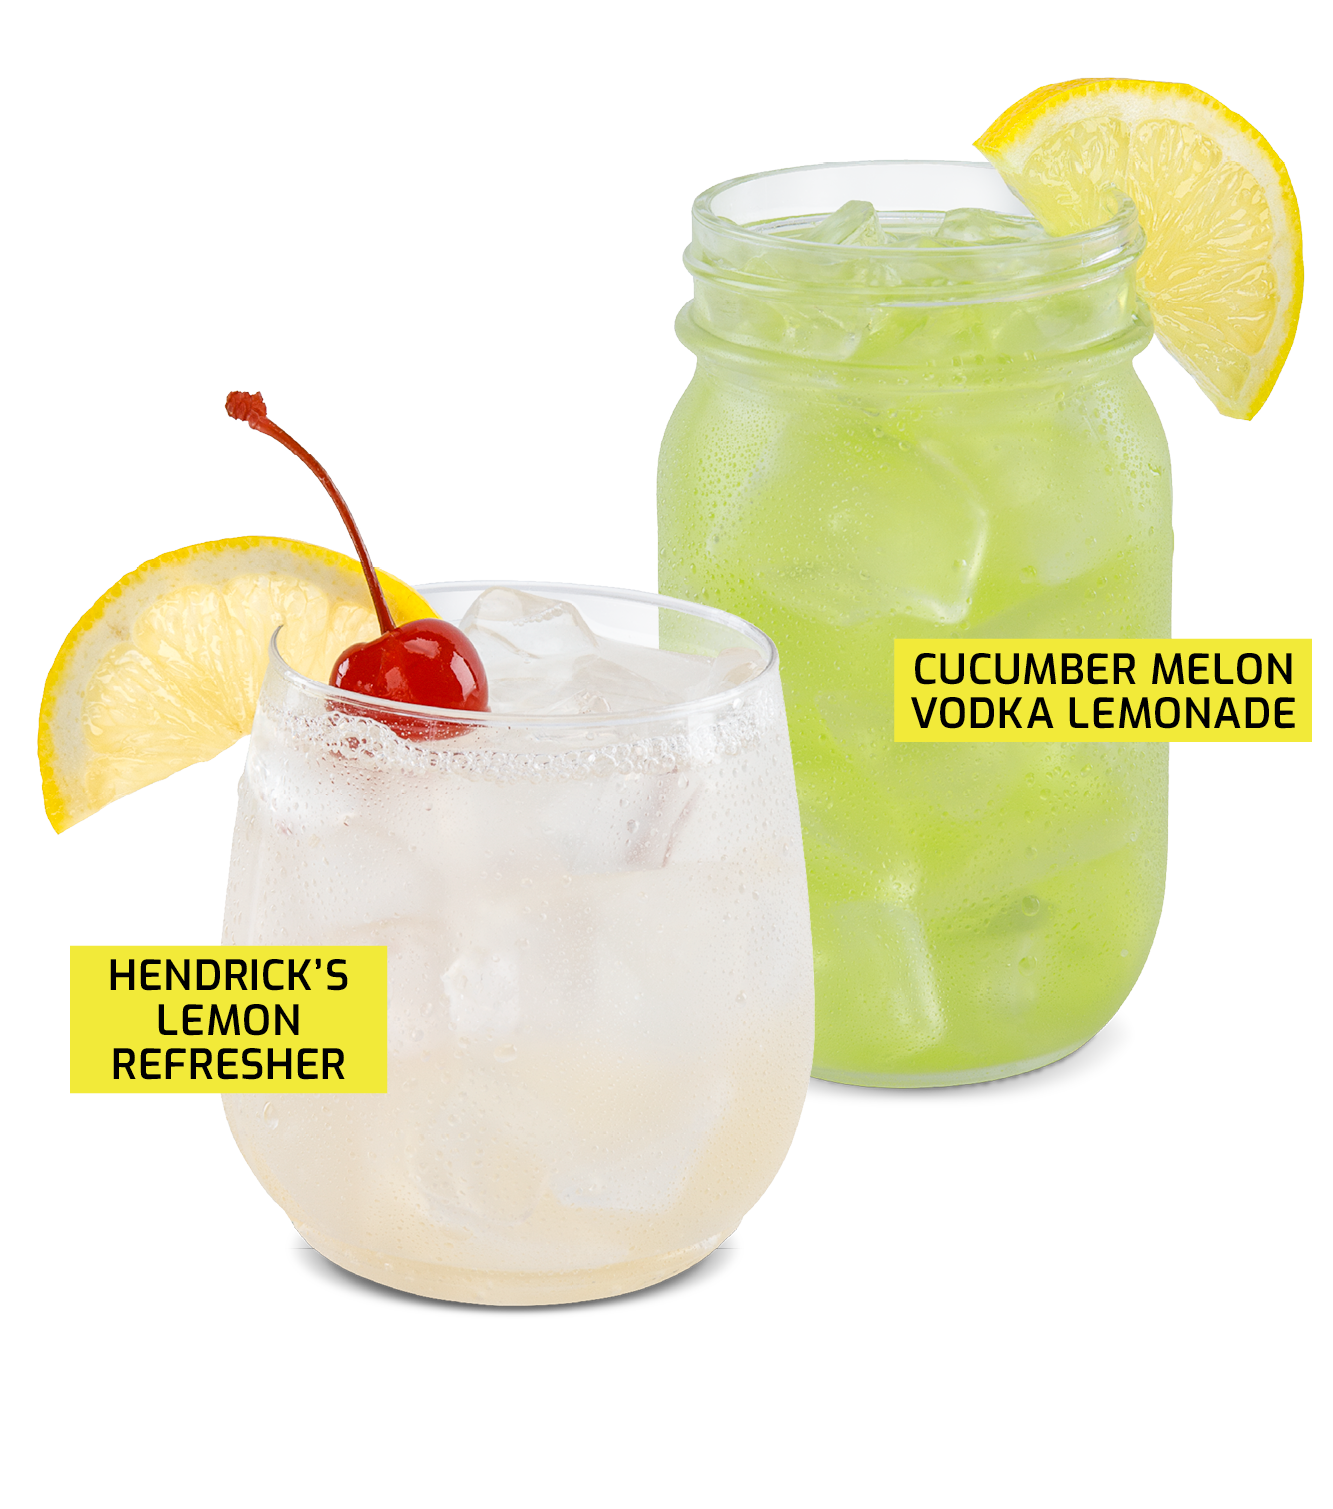 picture of hendrick's lemon refresher and cucumber melon vodka lemonade